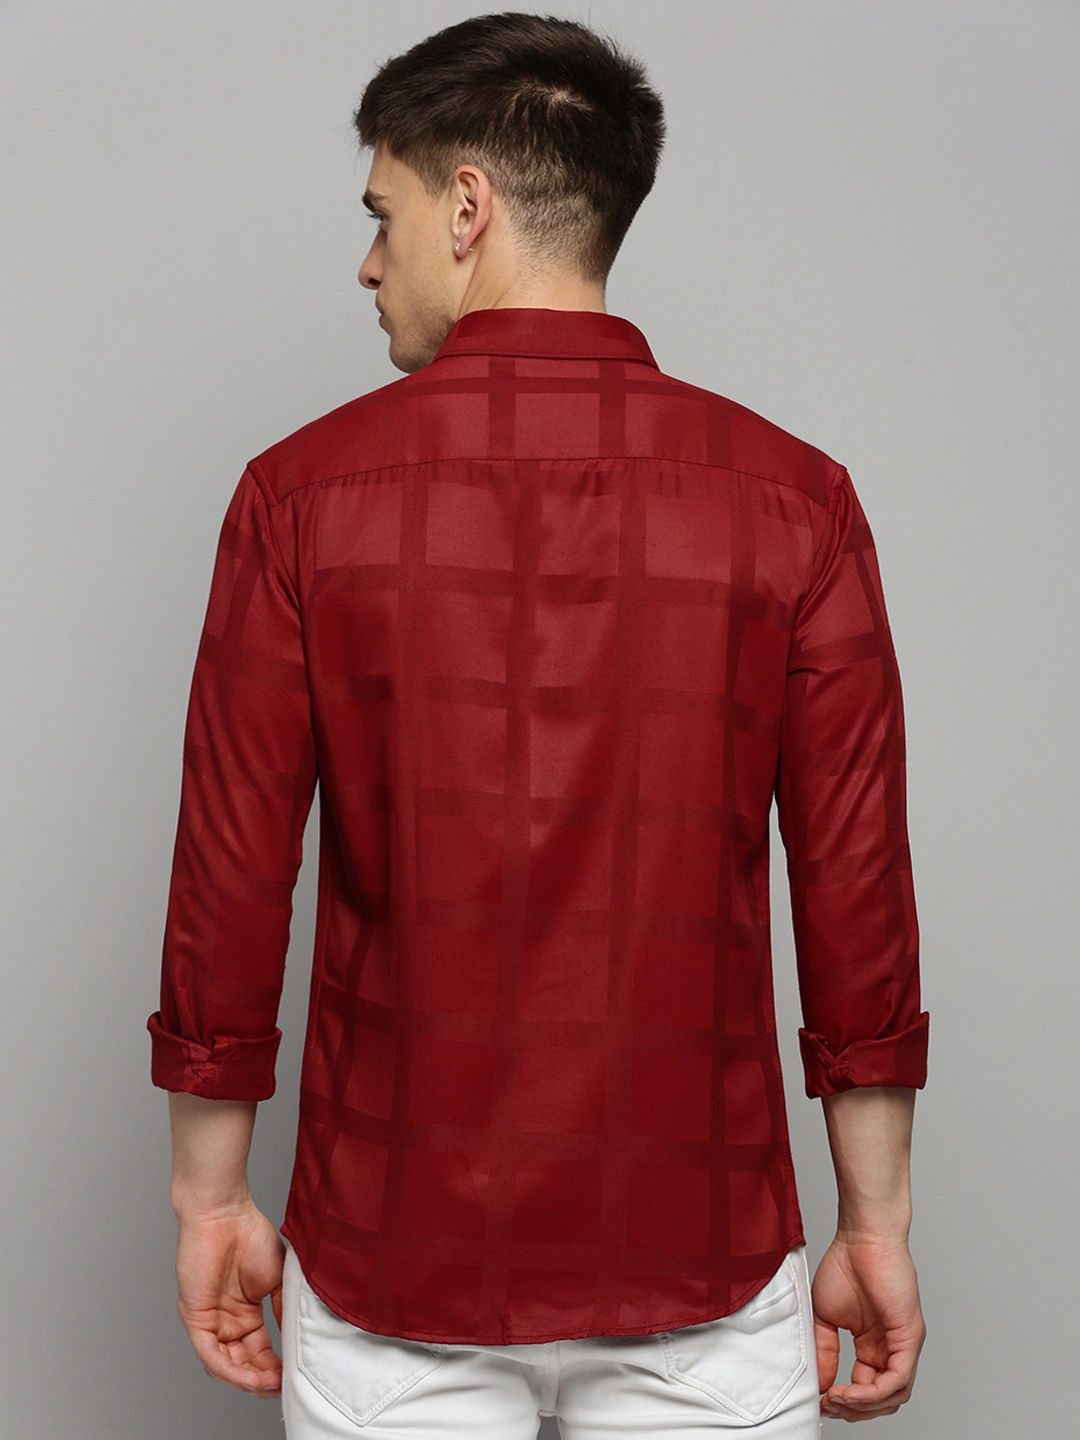 Showoff | SHOWOFF Men's Spread Collar Solid Maroon Classic Shirt 3